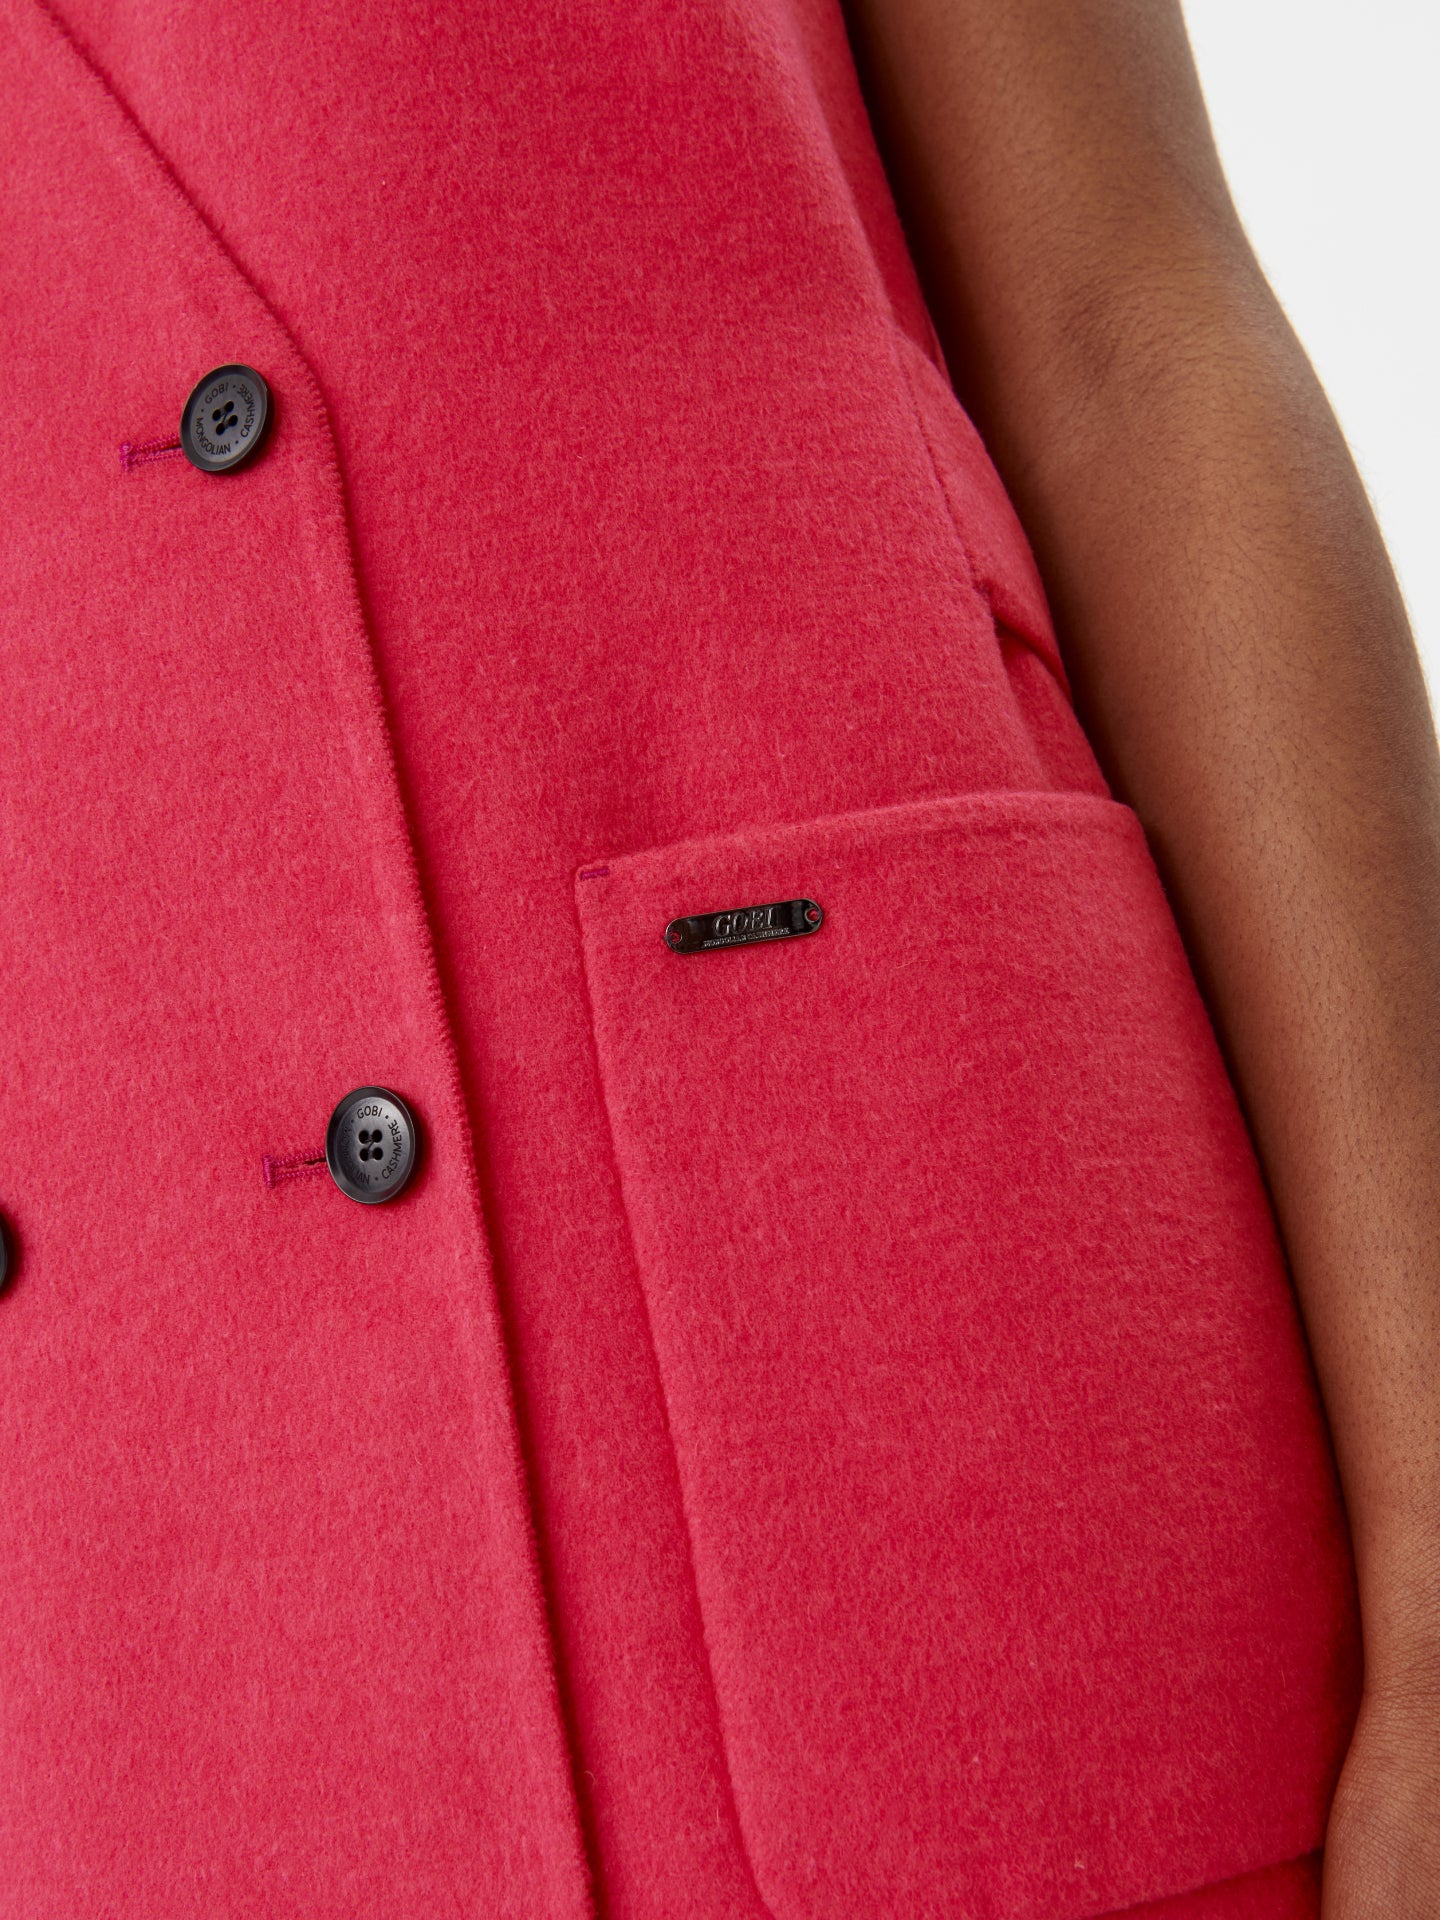 Women's Cashmere Double Breasted Vest Bright Rose - Gobi Cashmere